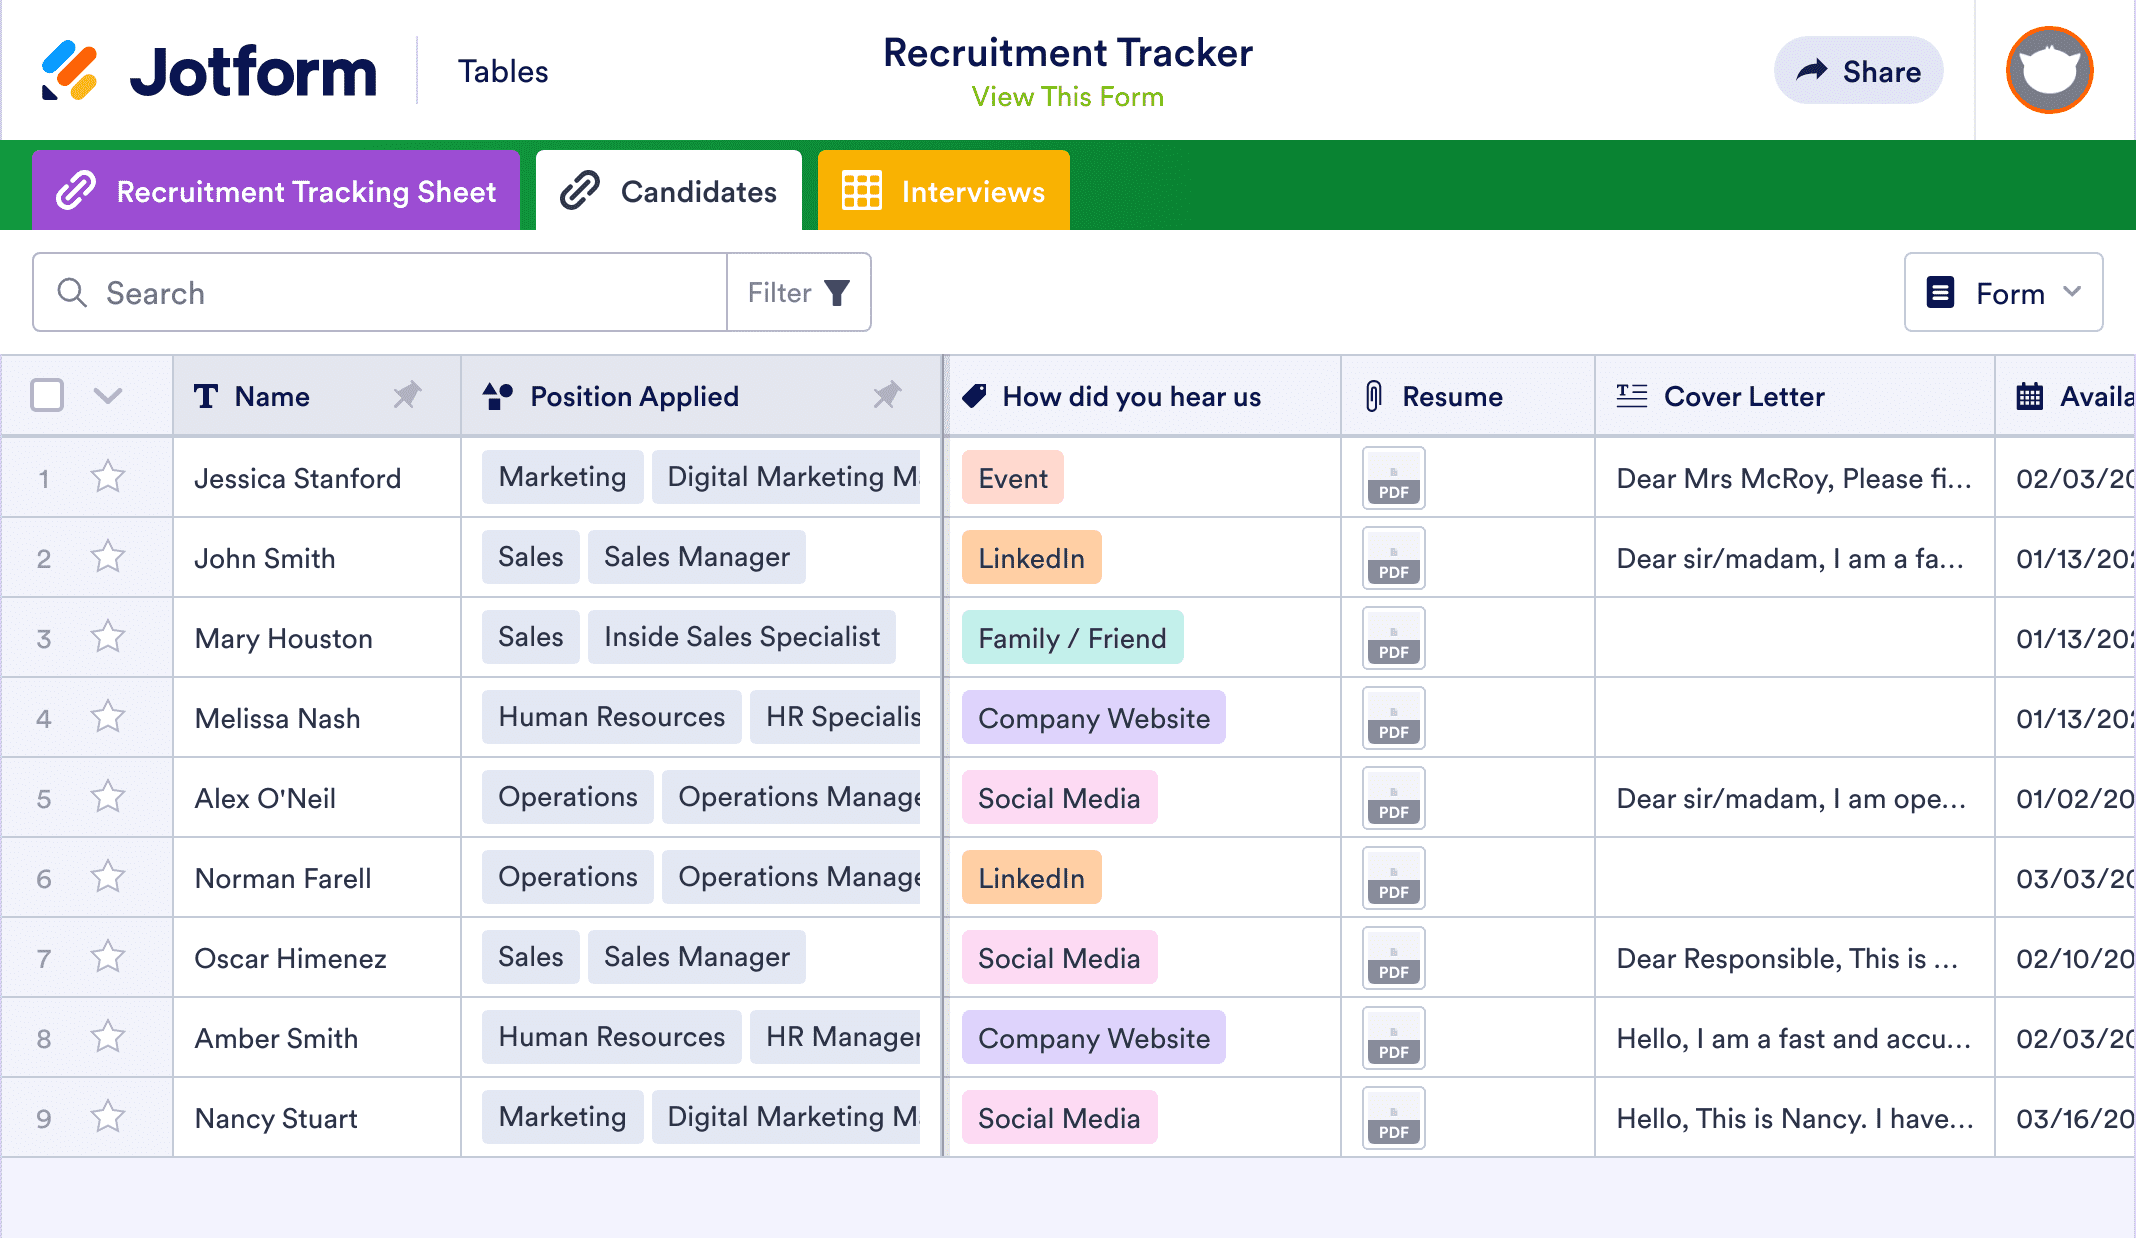 Recruitment Tracker